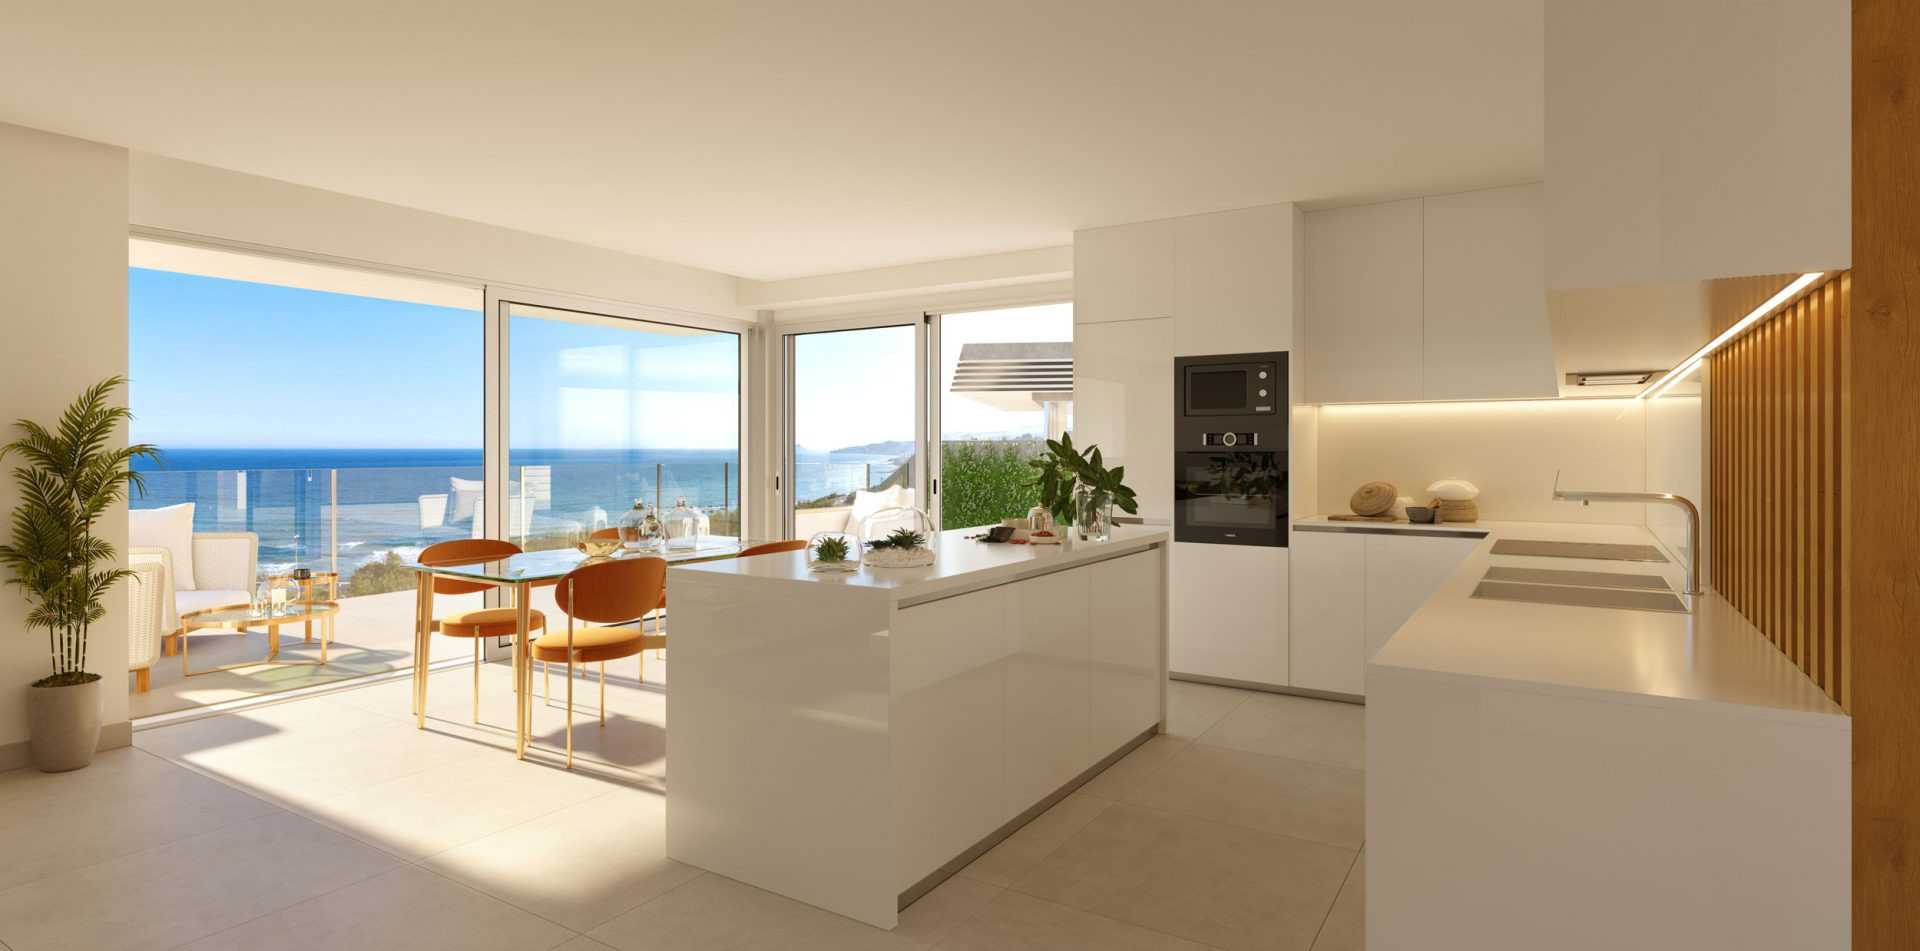 Exclusive 3-bedroom semi-detached house with avant-garde design and impressive sea views in Mijas Costa. | Image 10